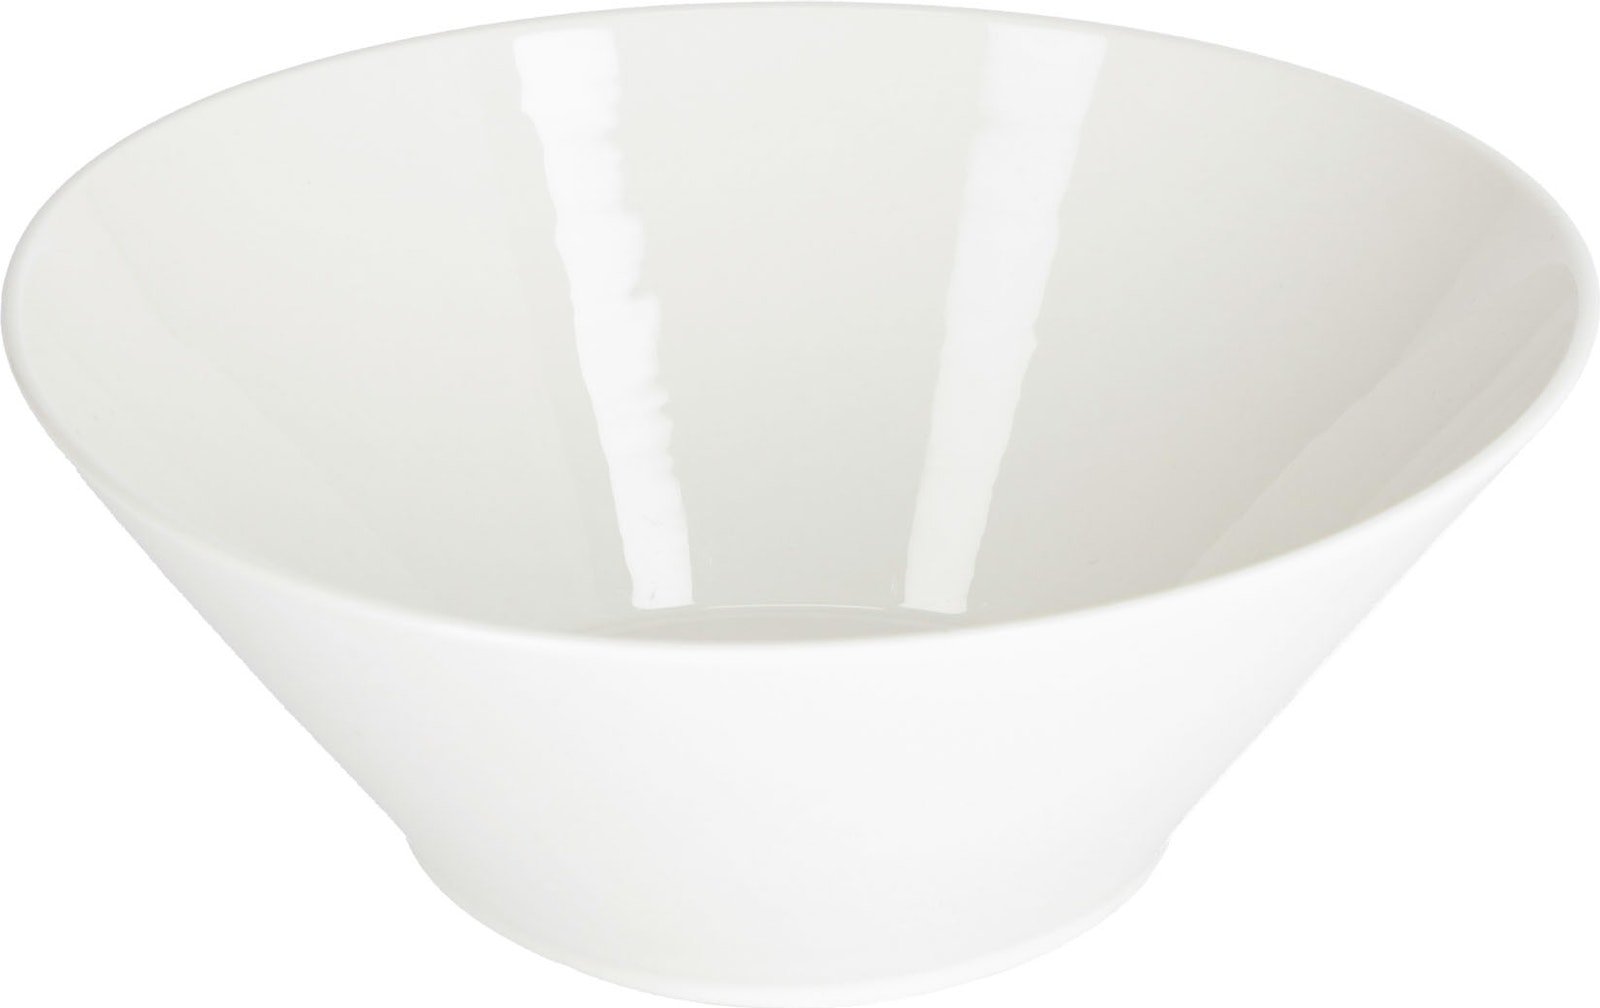 7: Pierina, Skål, keramik by Kave Home (H: 9 cm. B: 24.5 cm. L: 24.5 cm., Hvid)